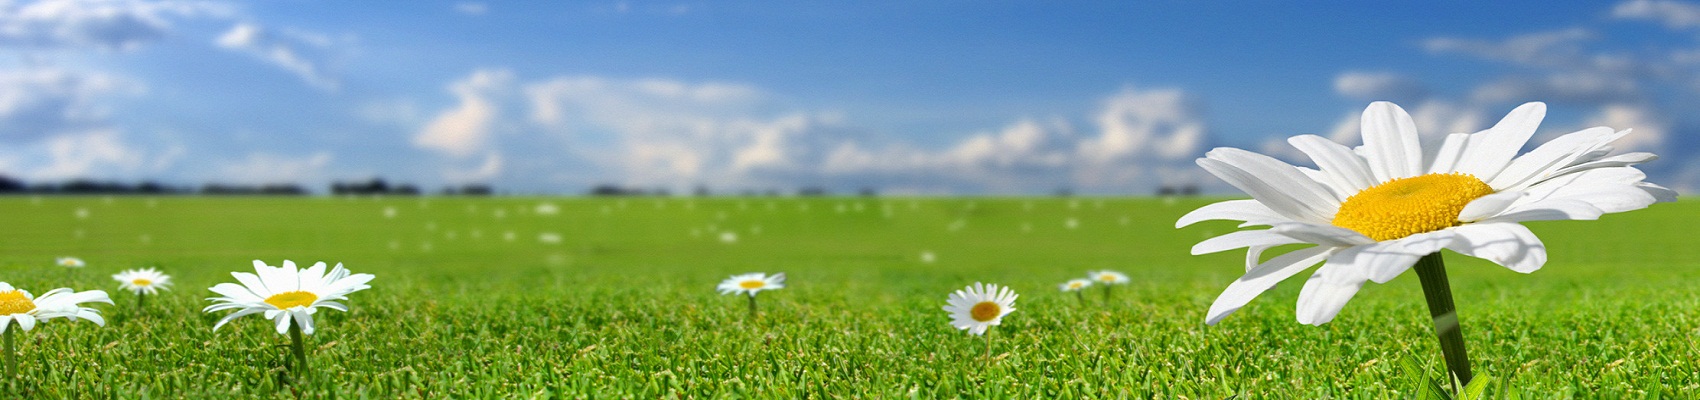 flower-camomile-summer-field-grass-blue-sky-v2